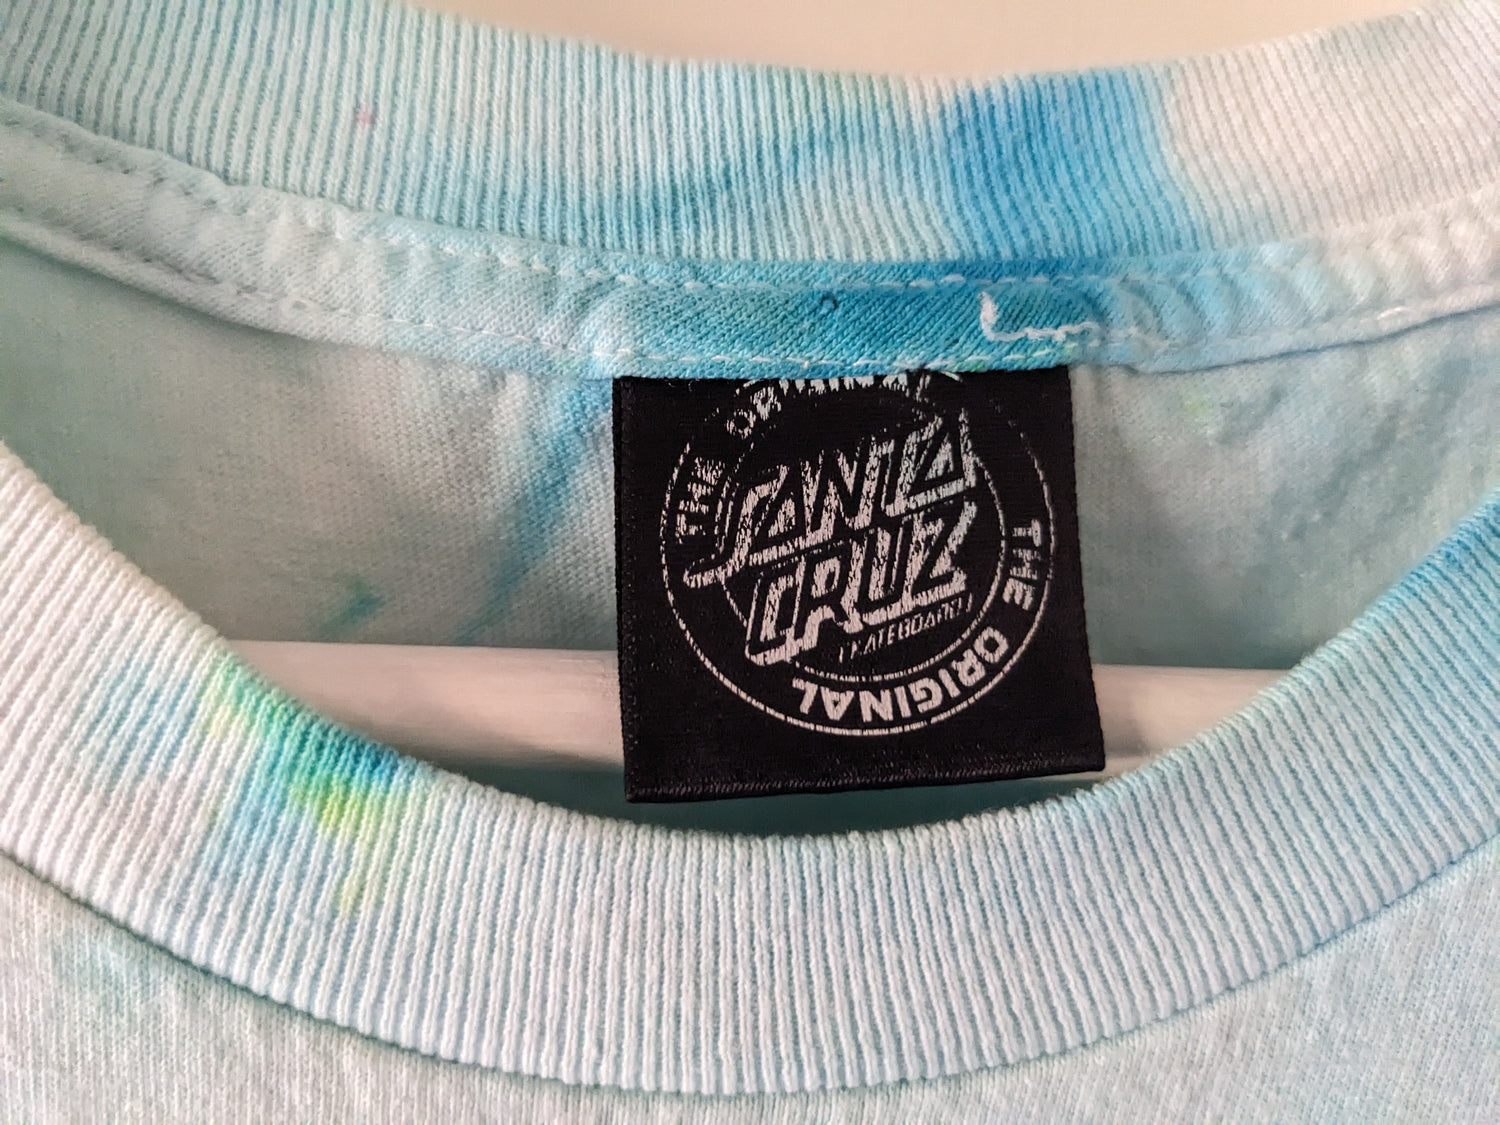 Green and Blue tie dye shirt with Santa Cruz Cypress design tag